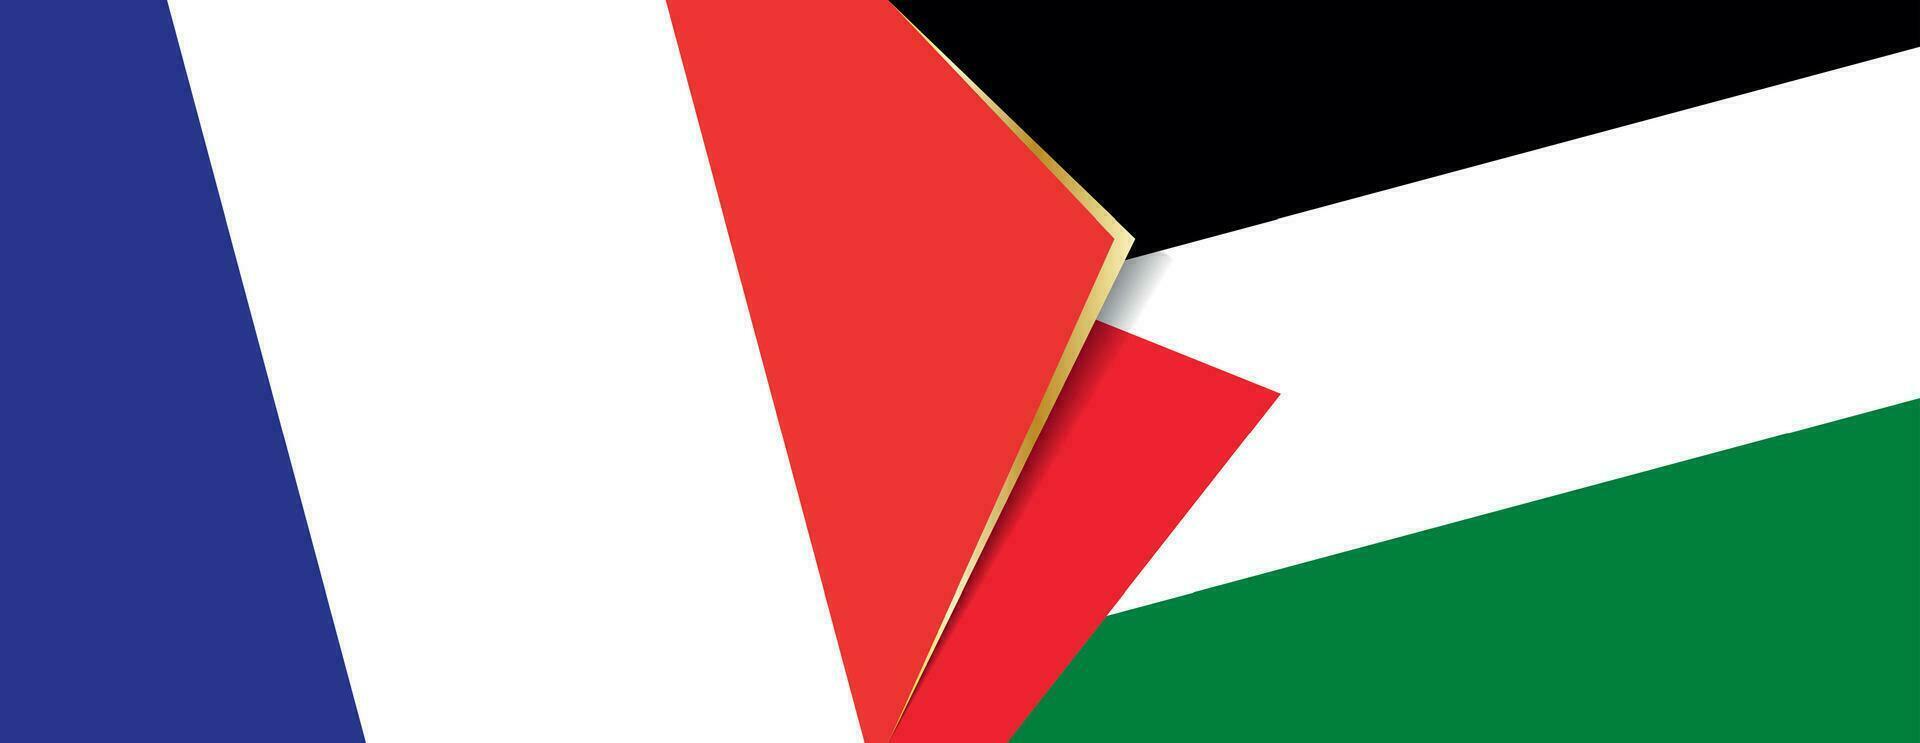 França e Palestina bandeiras, dois vetor bandeiras.